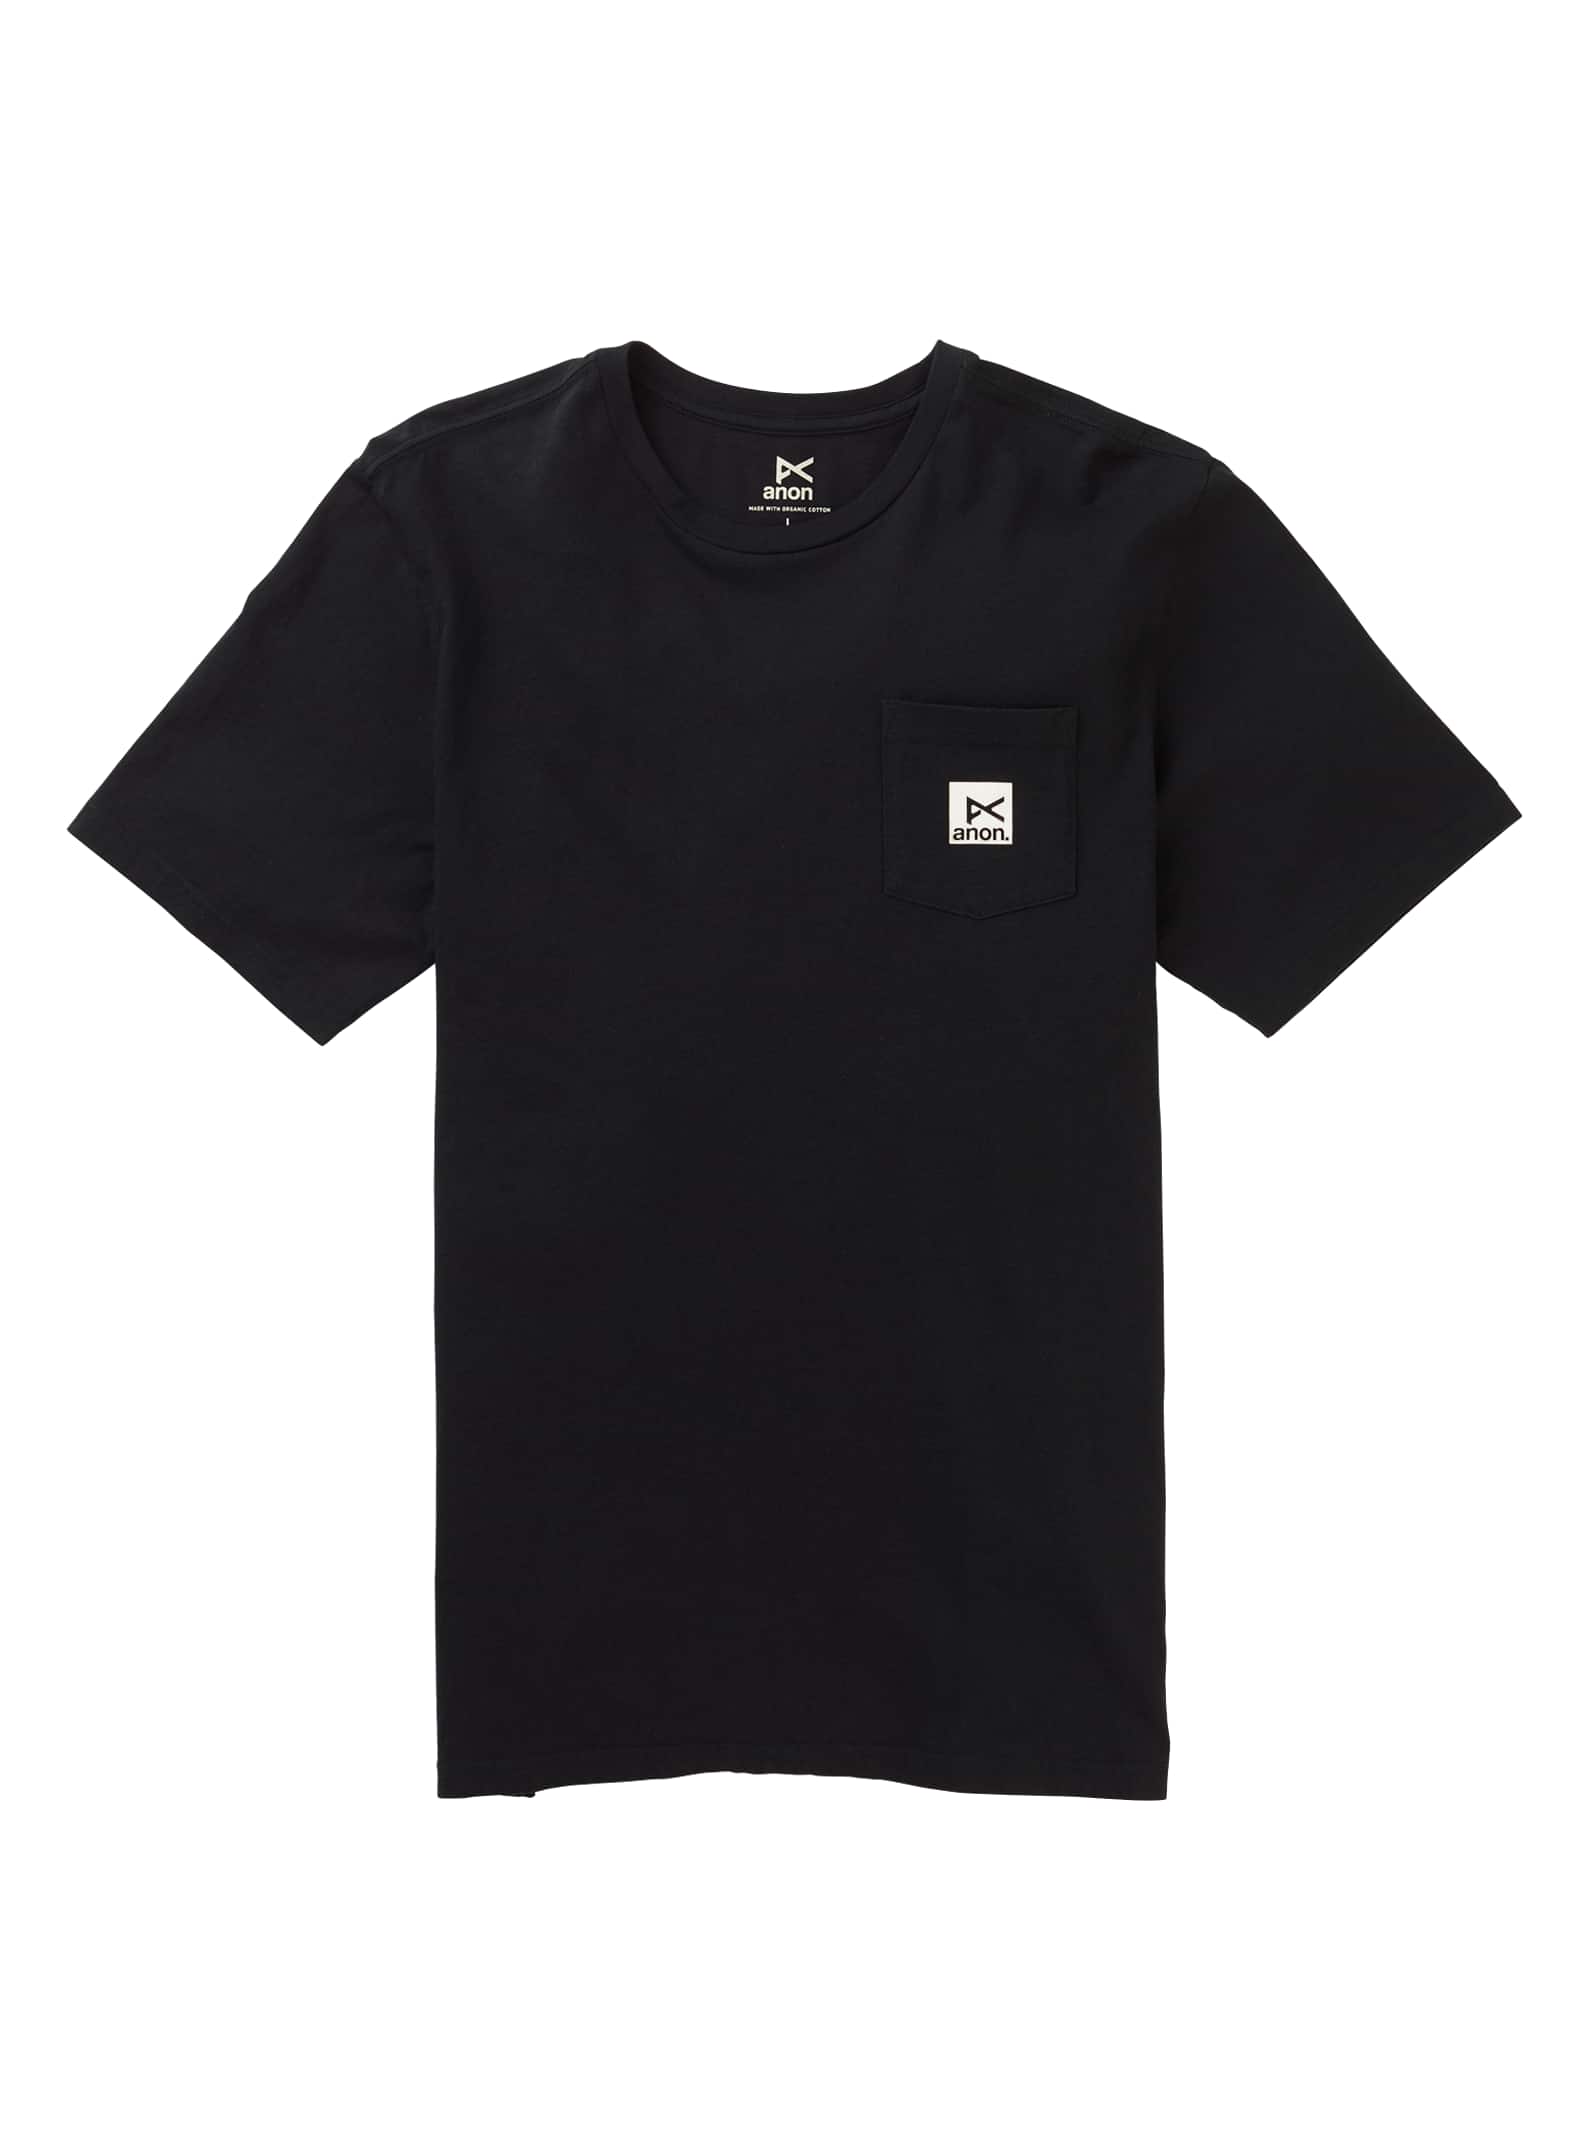 Anon Short Sleeve Pocket T-Shirt, Black, S